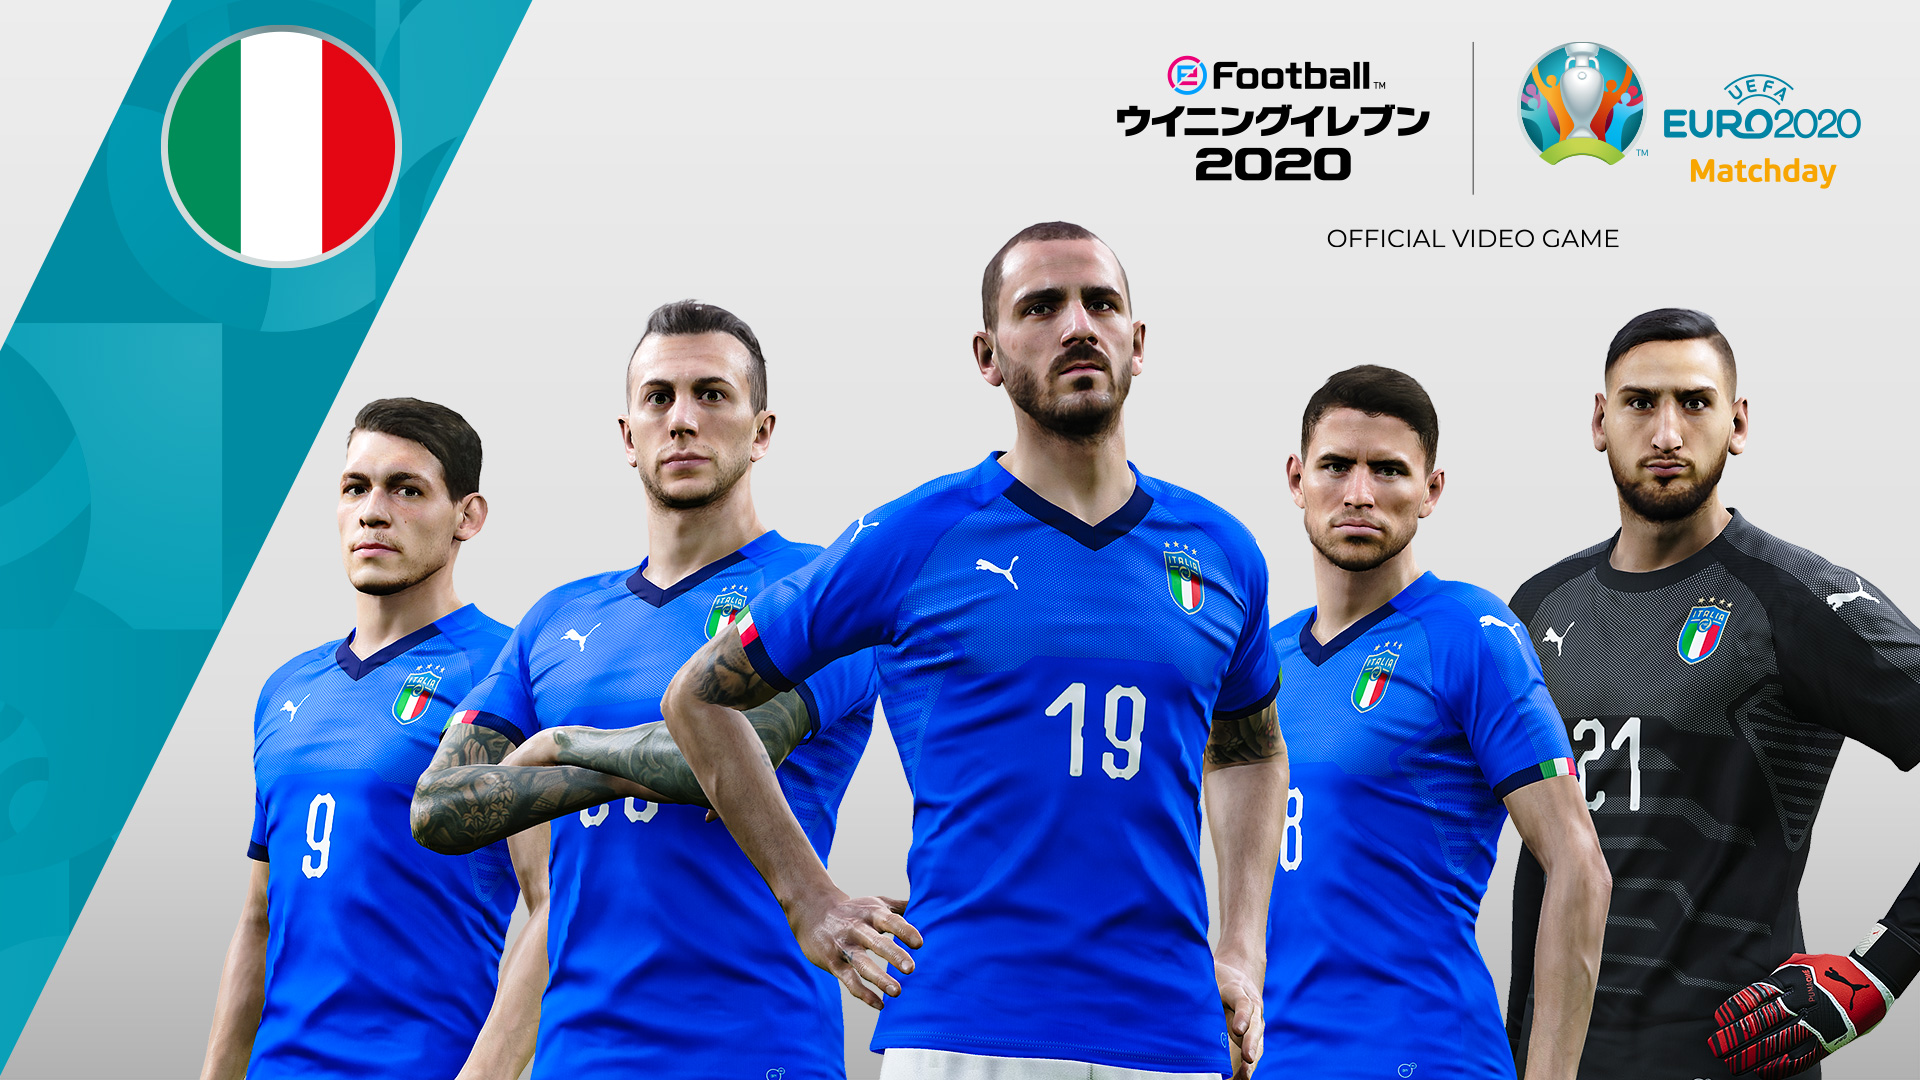 Efootball 公式 Pa Twitter Uefa Euro Matchdayのグループステージが遂に開催 初日は以下の チームが対戦 トルコ V イタリア ウェールズ V スイス デンマーク V フィンランド プリセットチームを使用するナショナルチームの威信をかけた戦いに 今すぐ参加